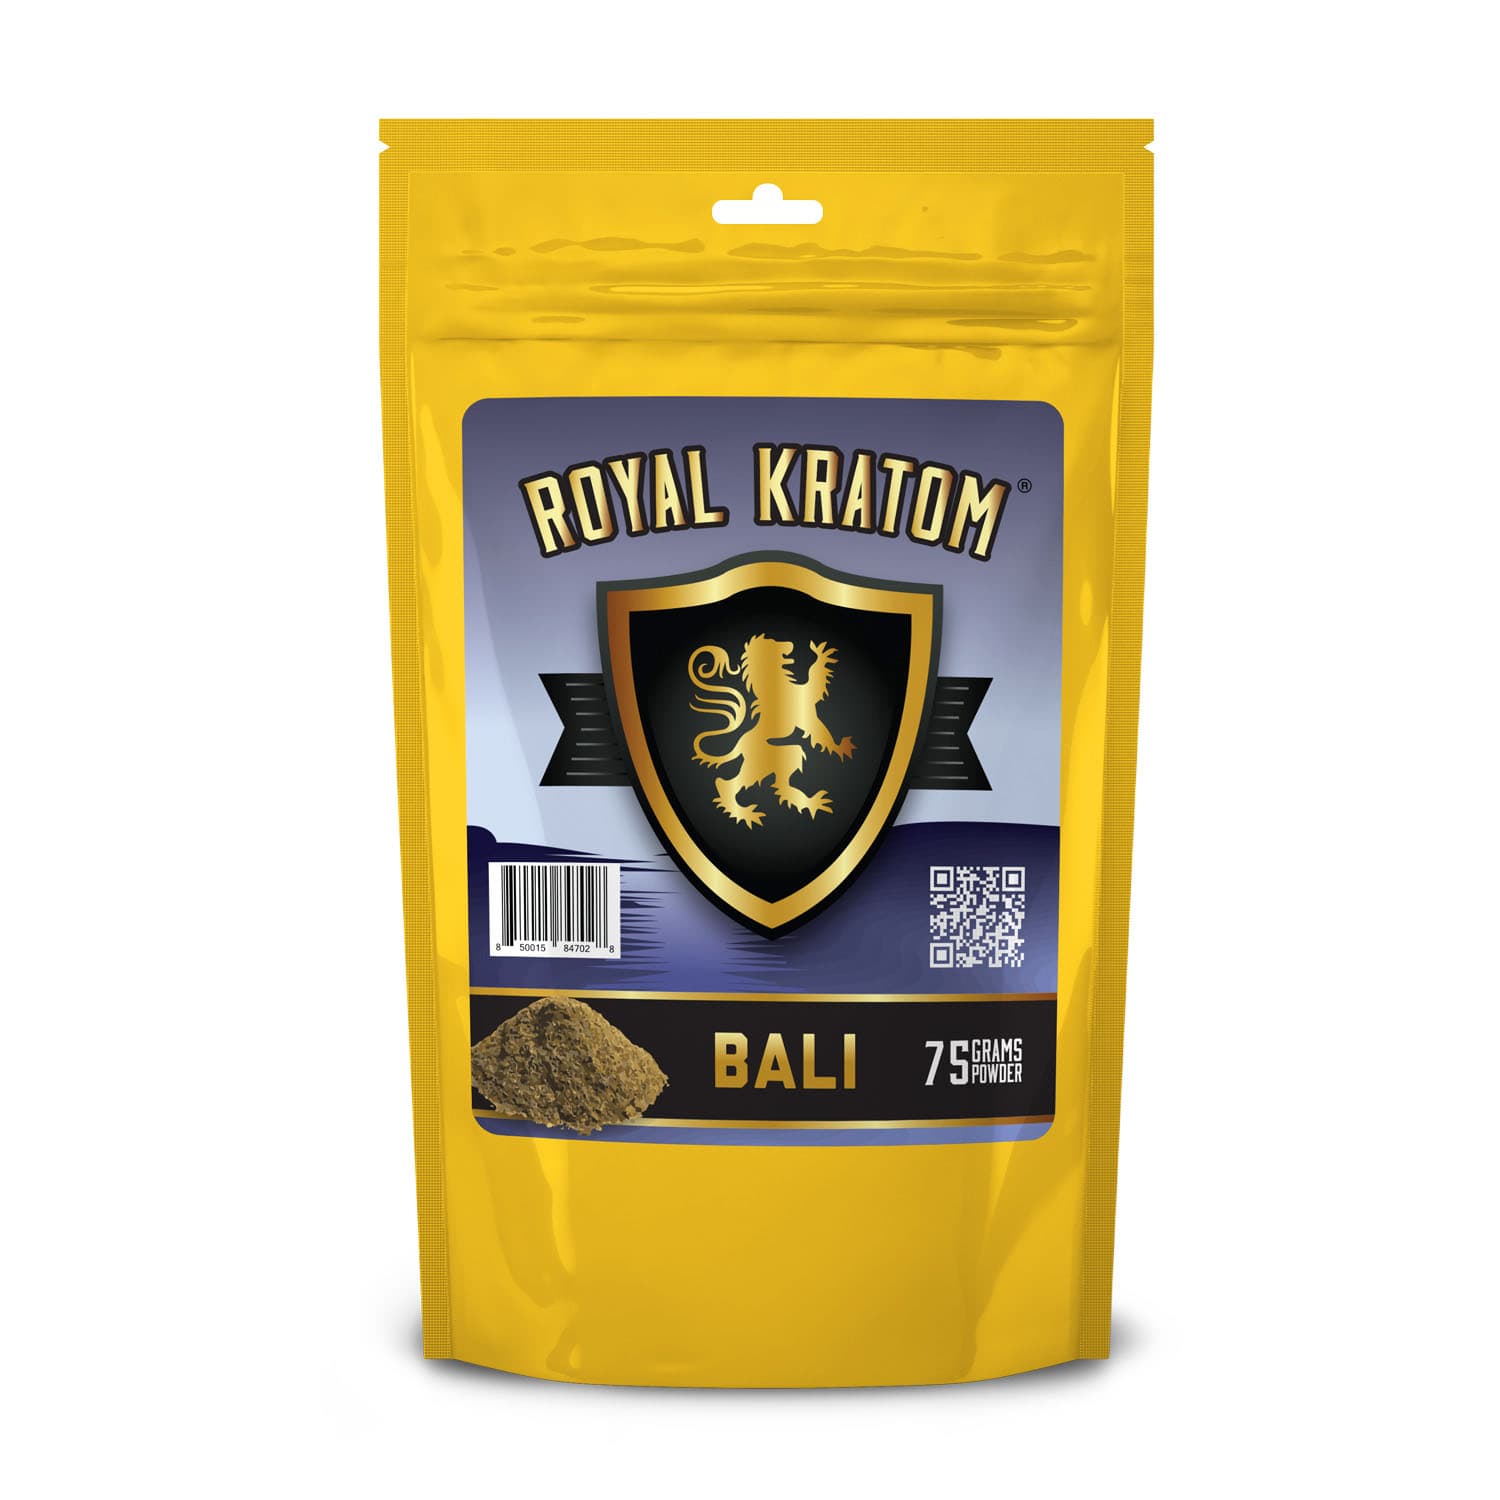 Bag of Royal Kratom Bali powder